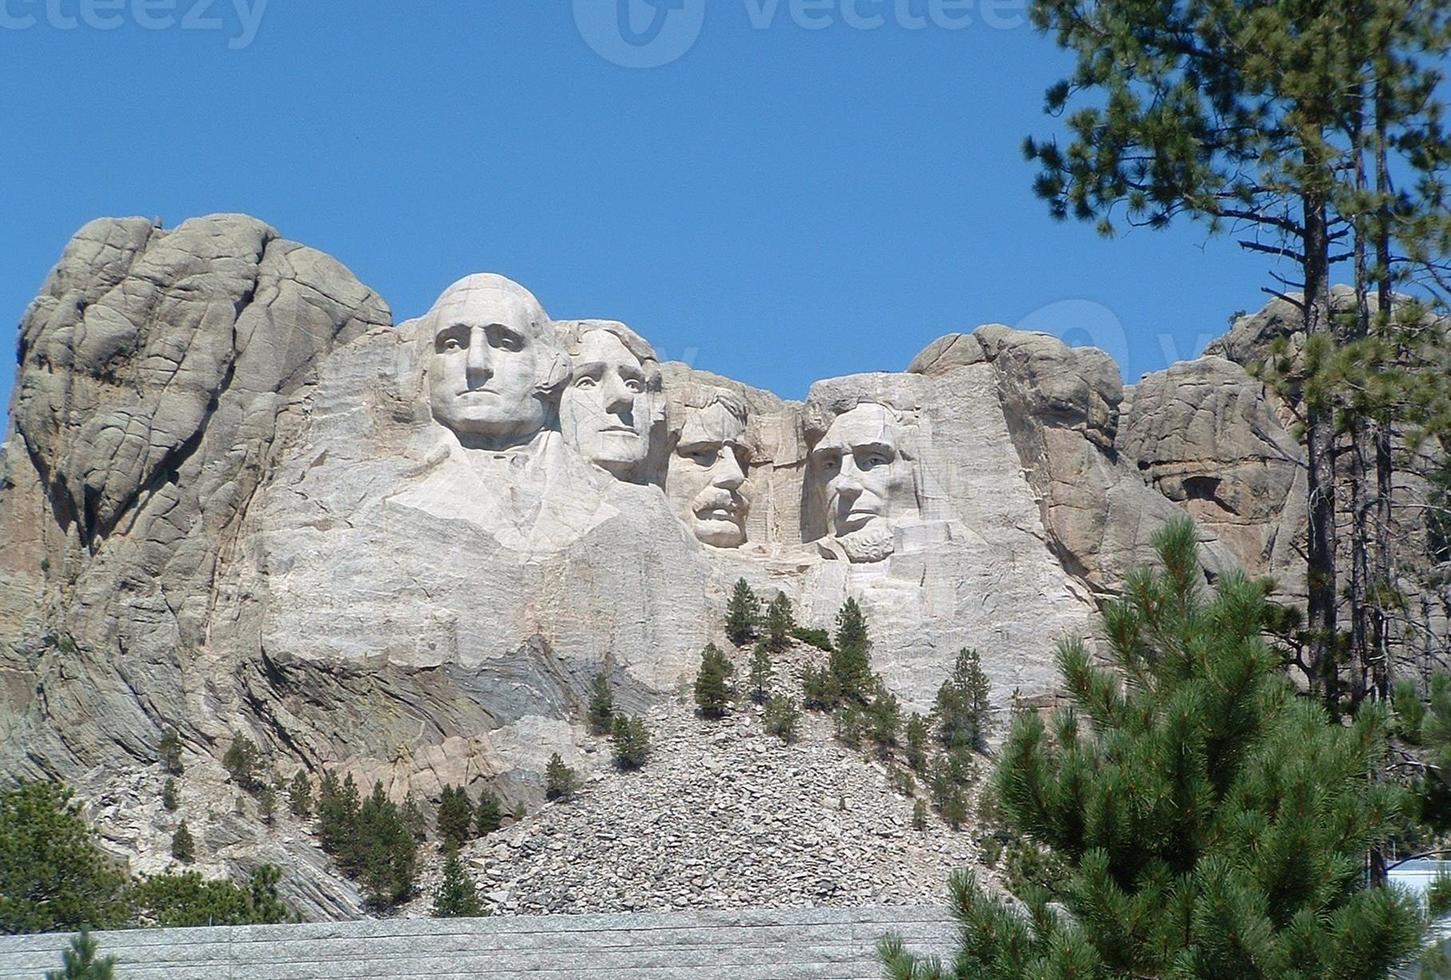 Mount Rushmore foto